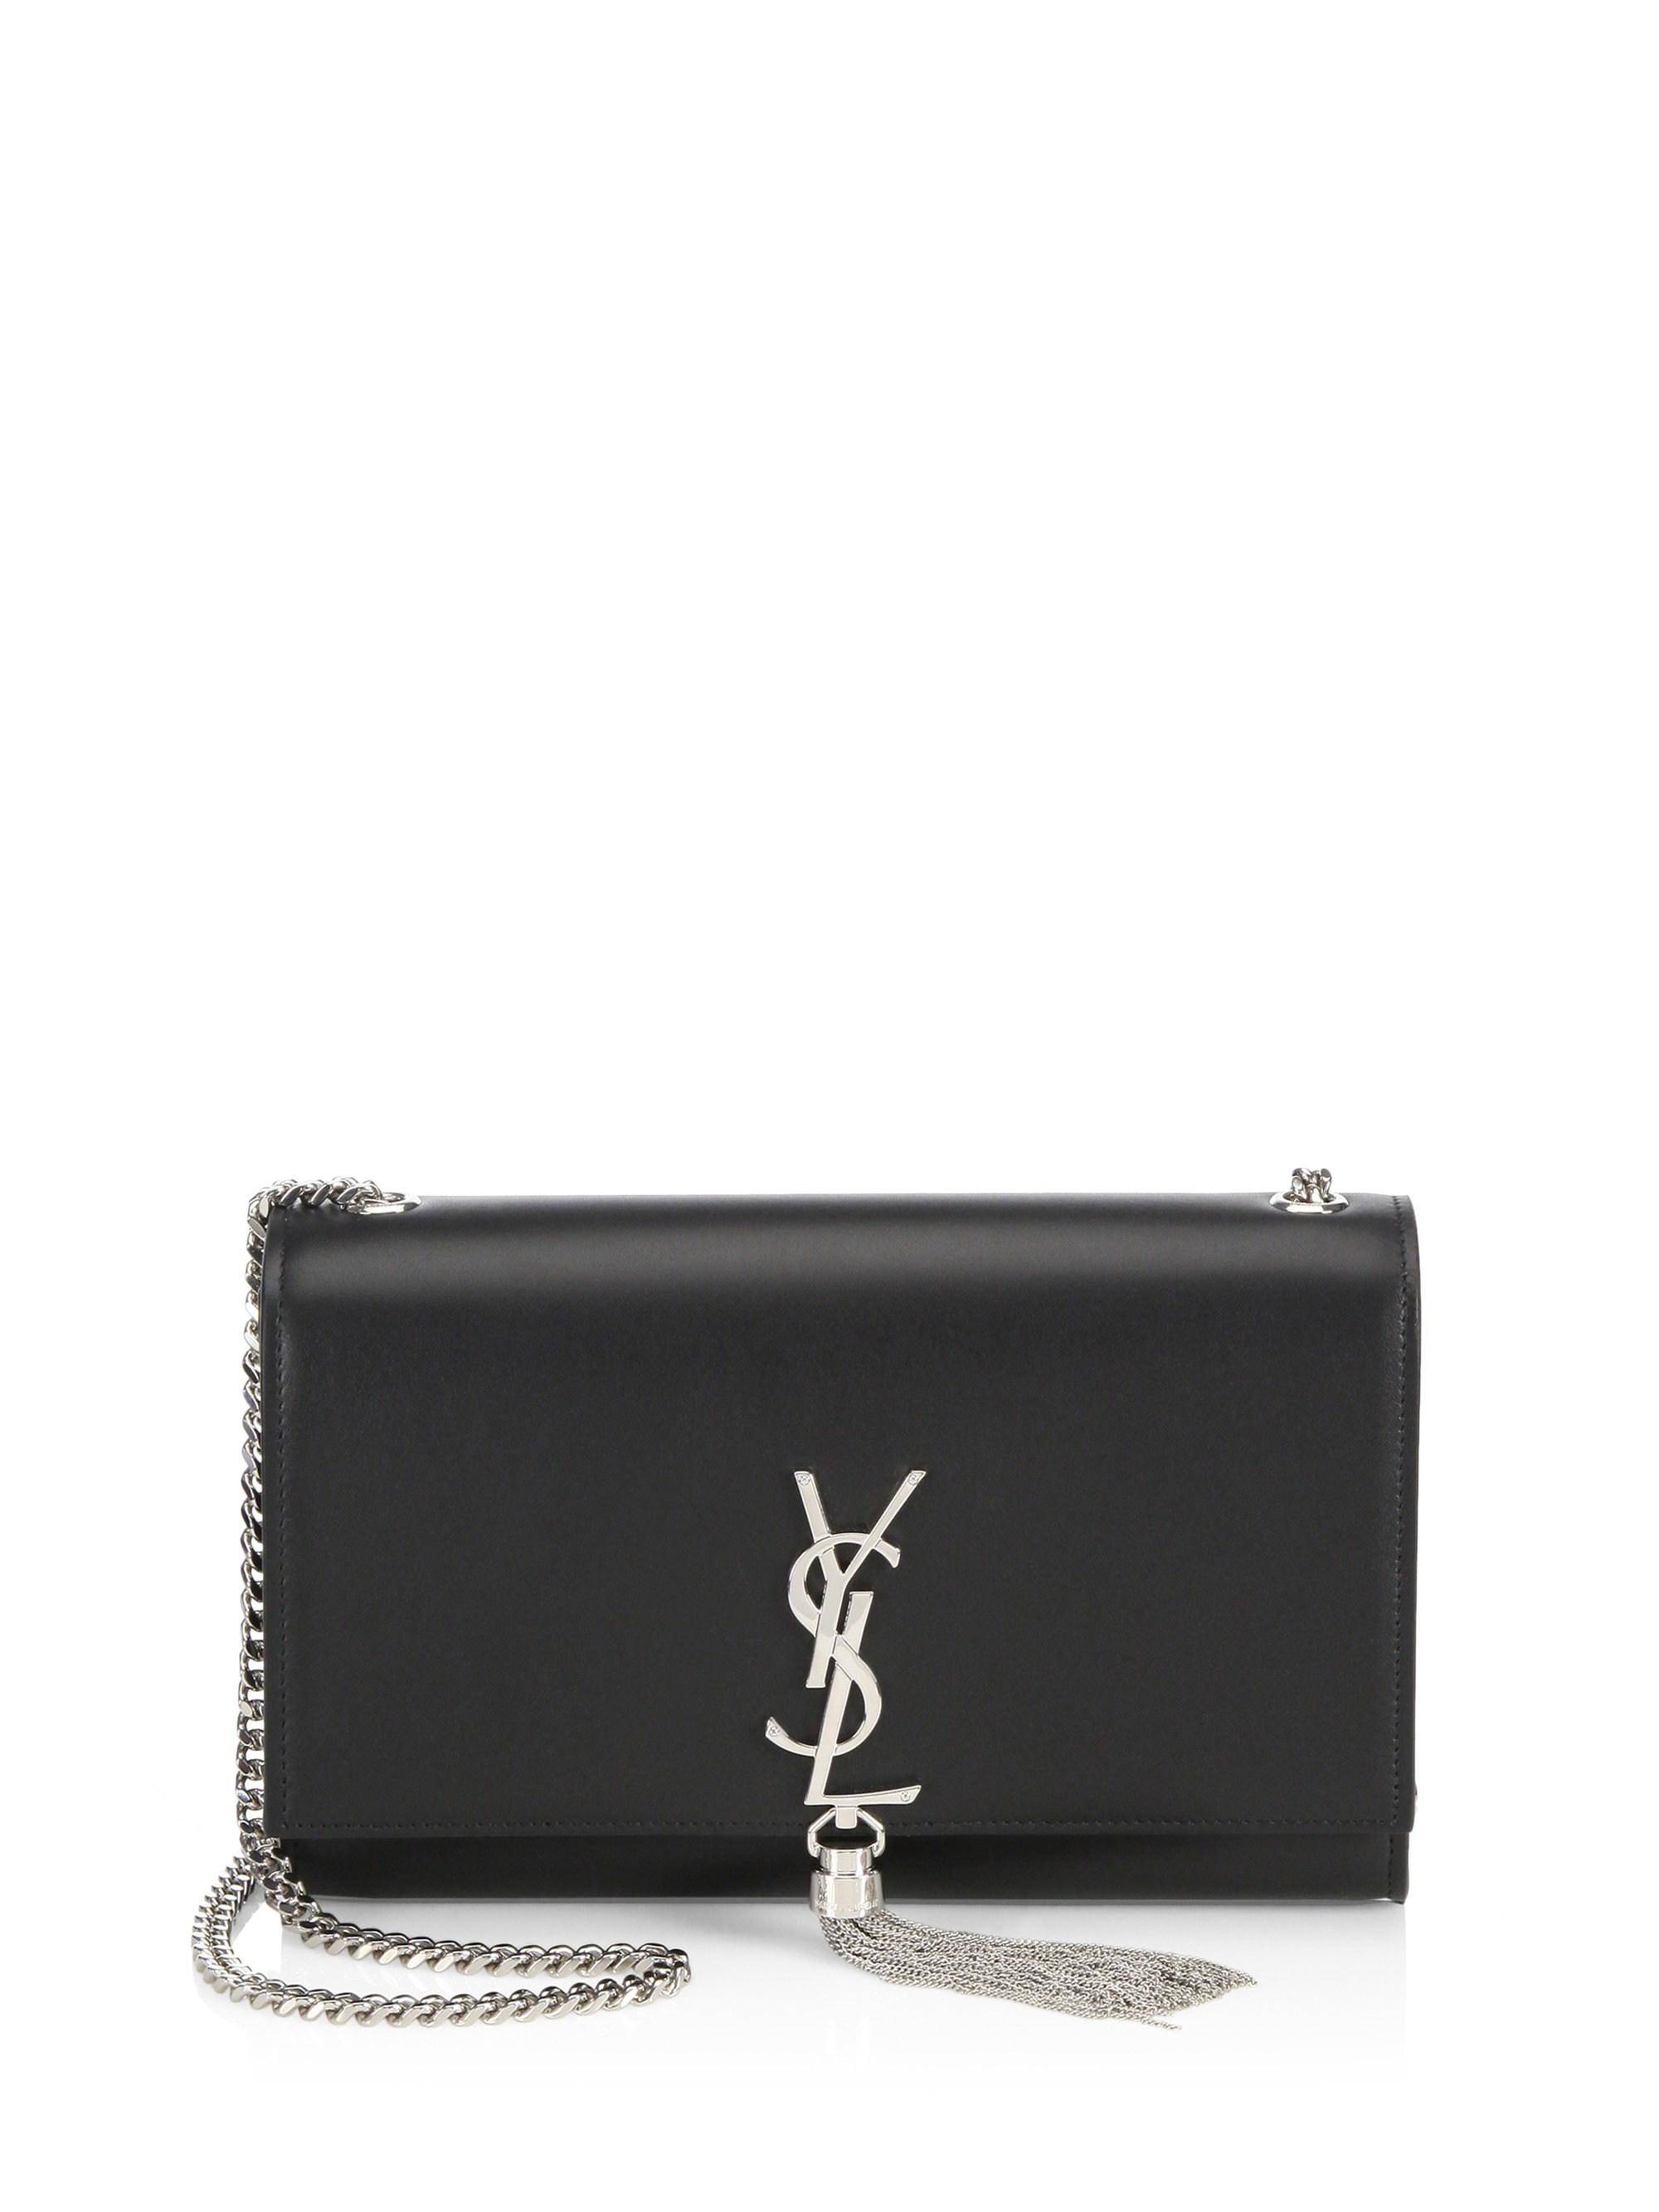 Saint Laurent Medium Kate Monogram Leather Tassel Chain Shoulder Bag in ...